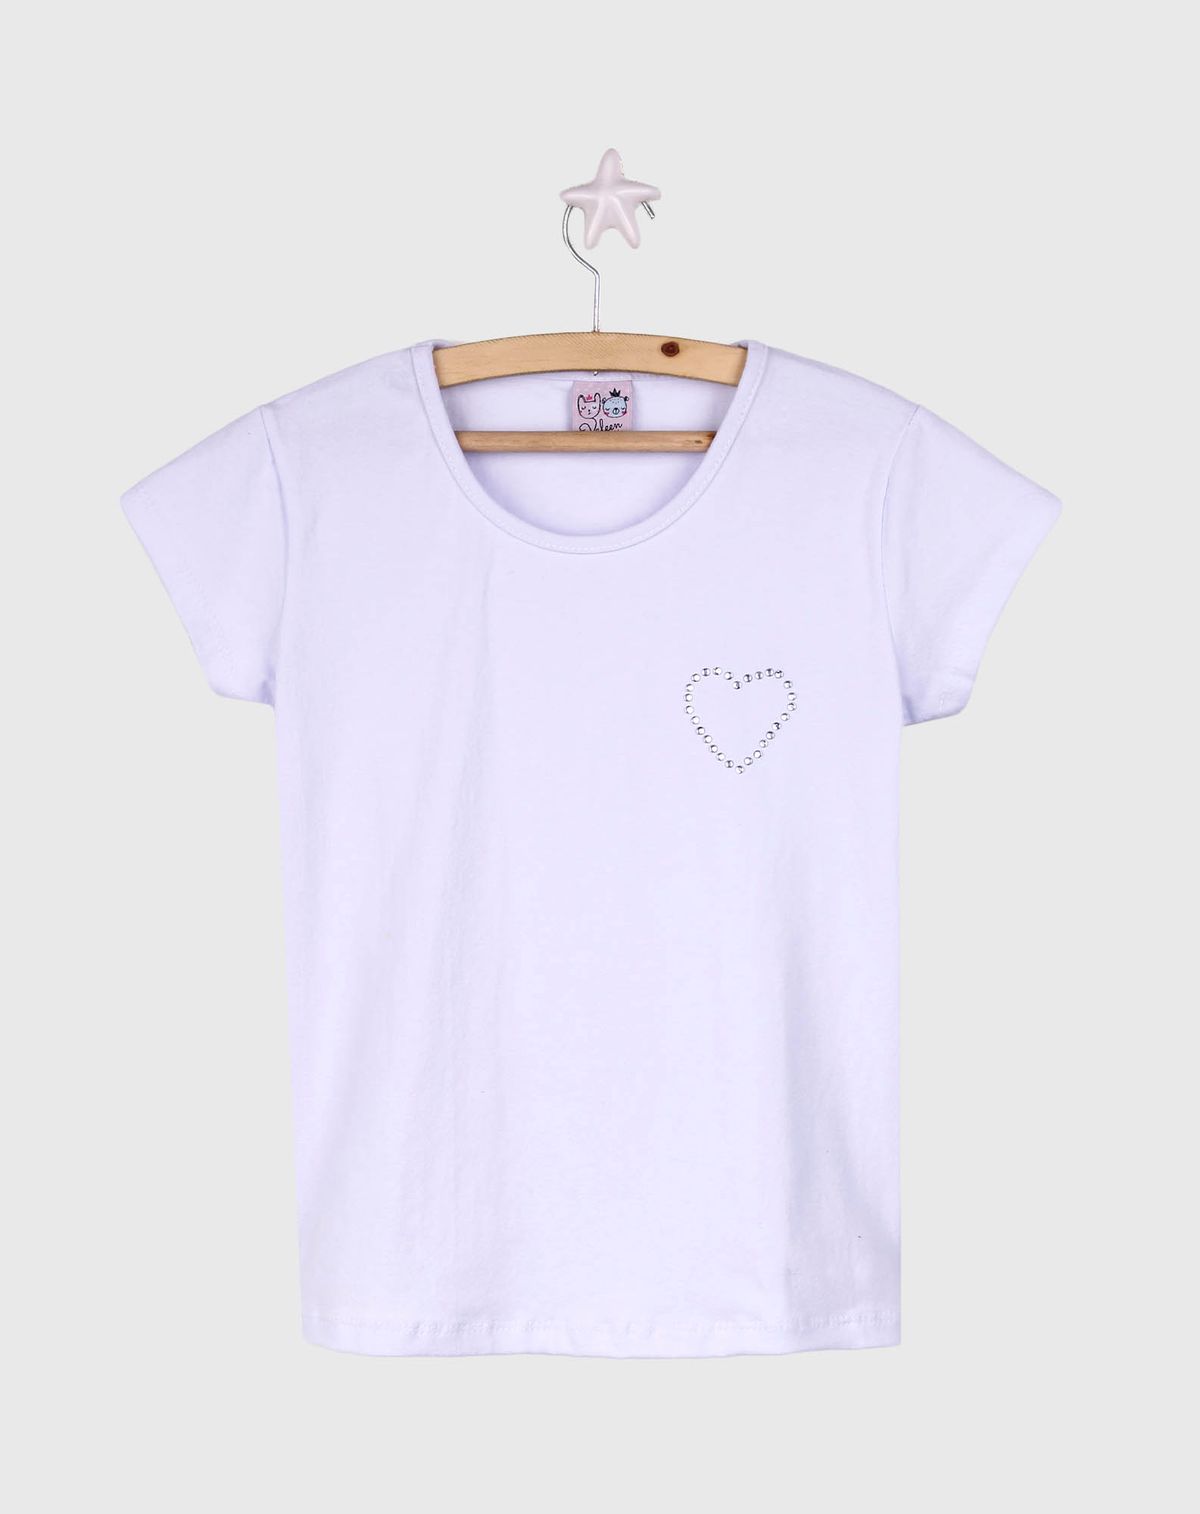 691816001-camiseta-manga-curta-infantil-menina-strass-branco-4-9ab